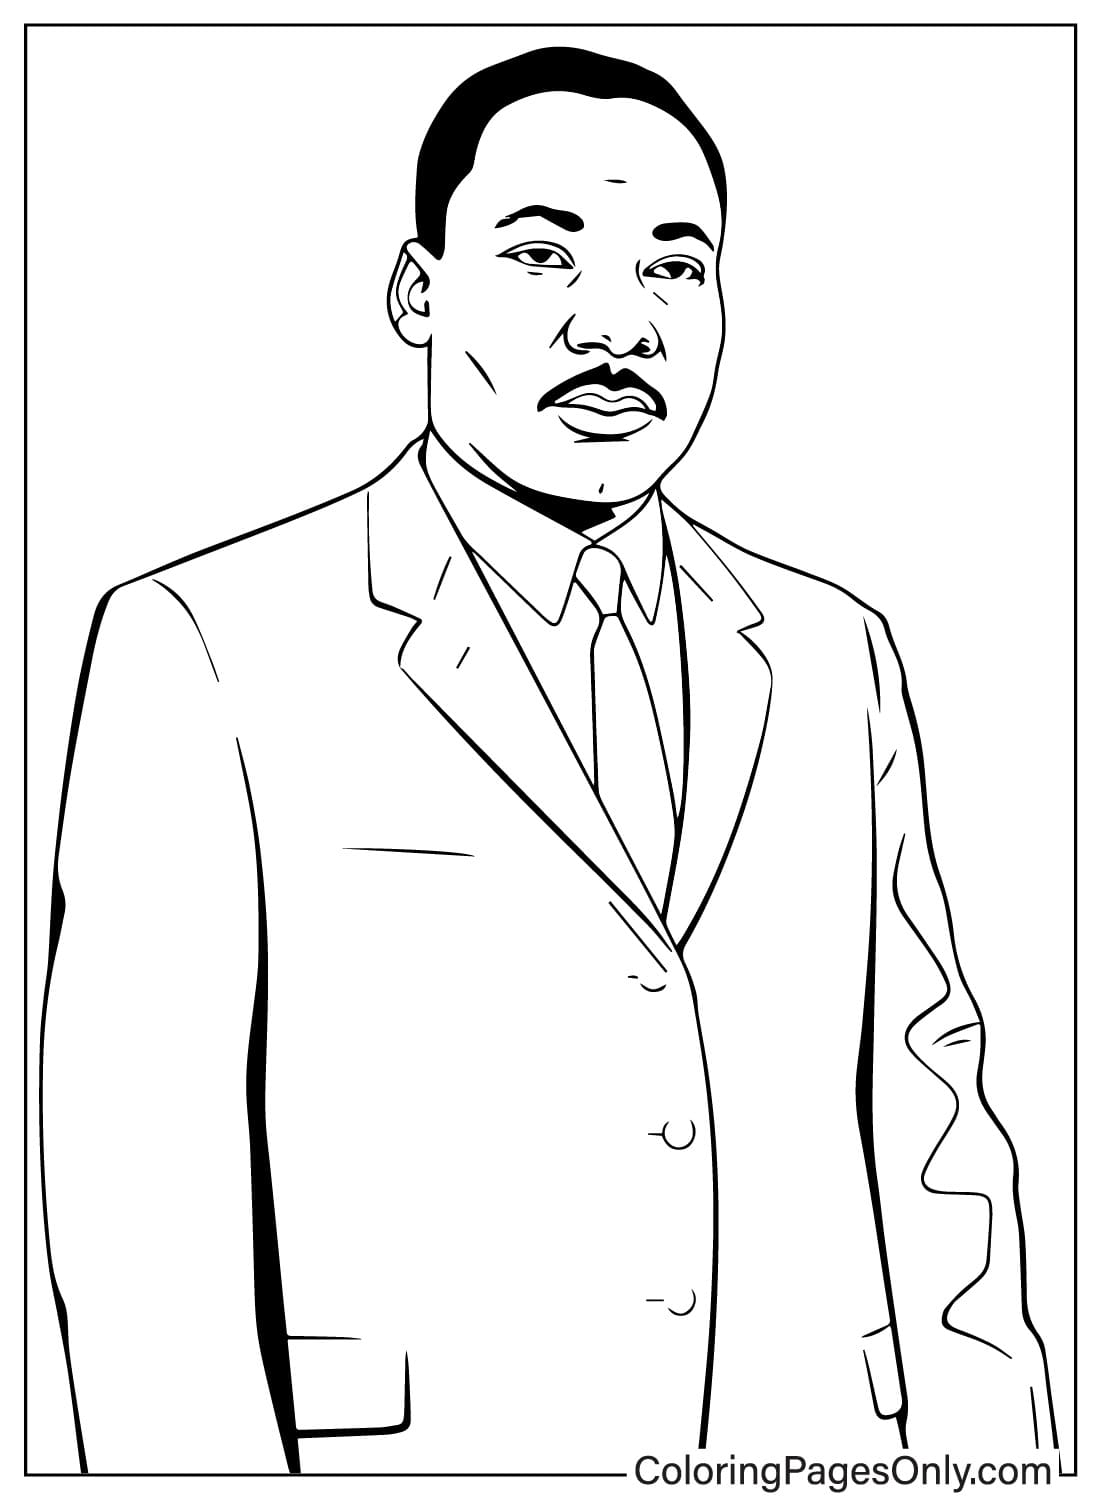 Página para colorear de Martin Luther King de Martin Luther King Jr.